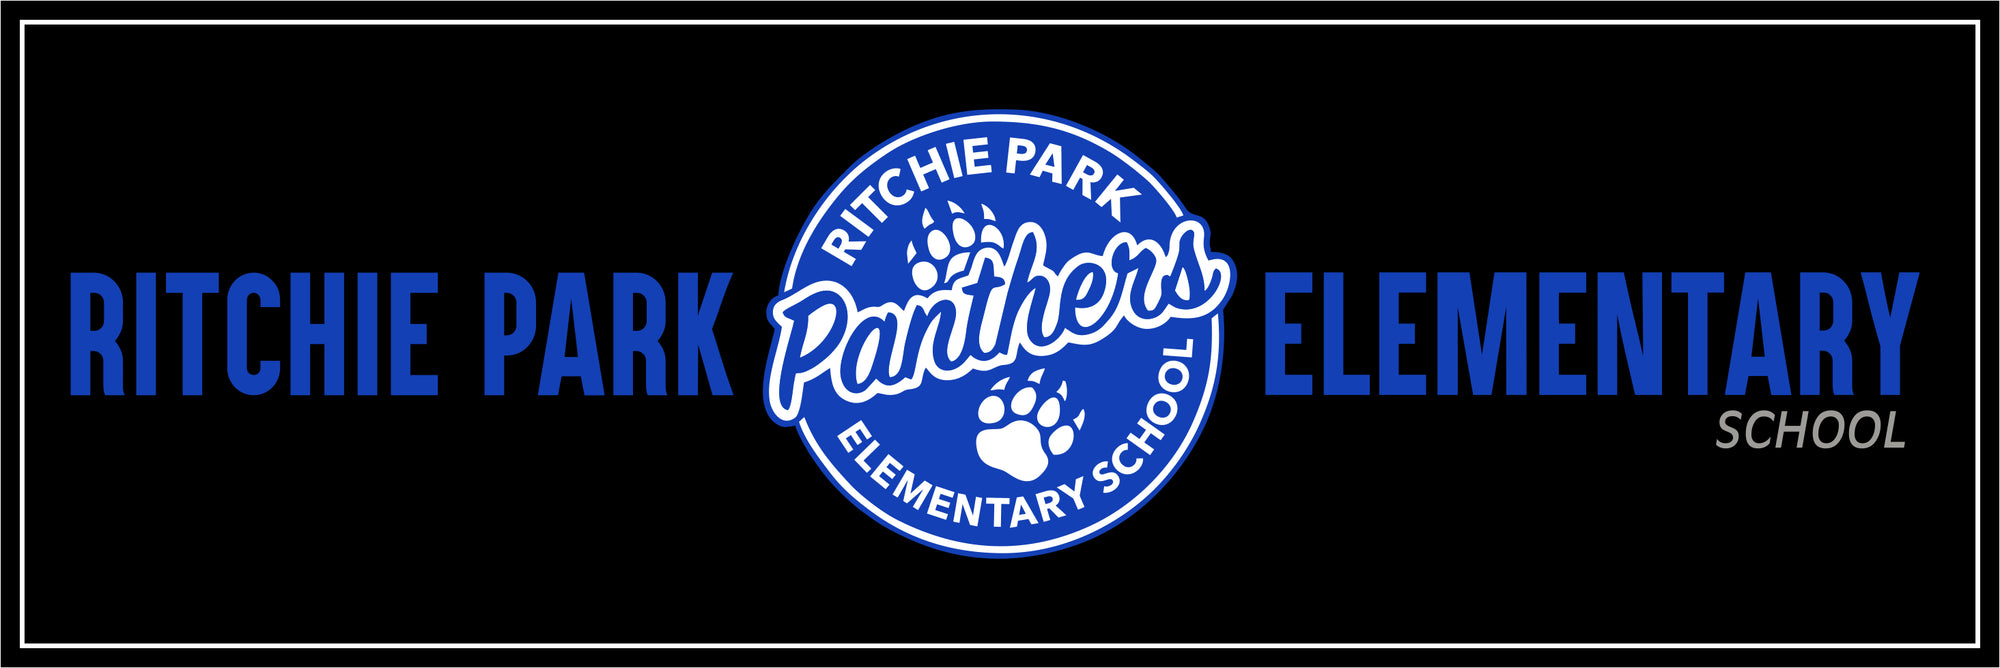 Ritchie Park Elementary School §